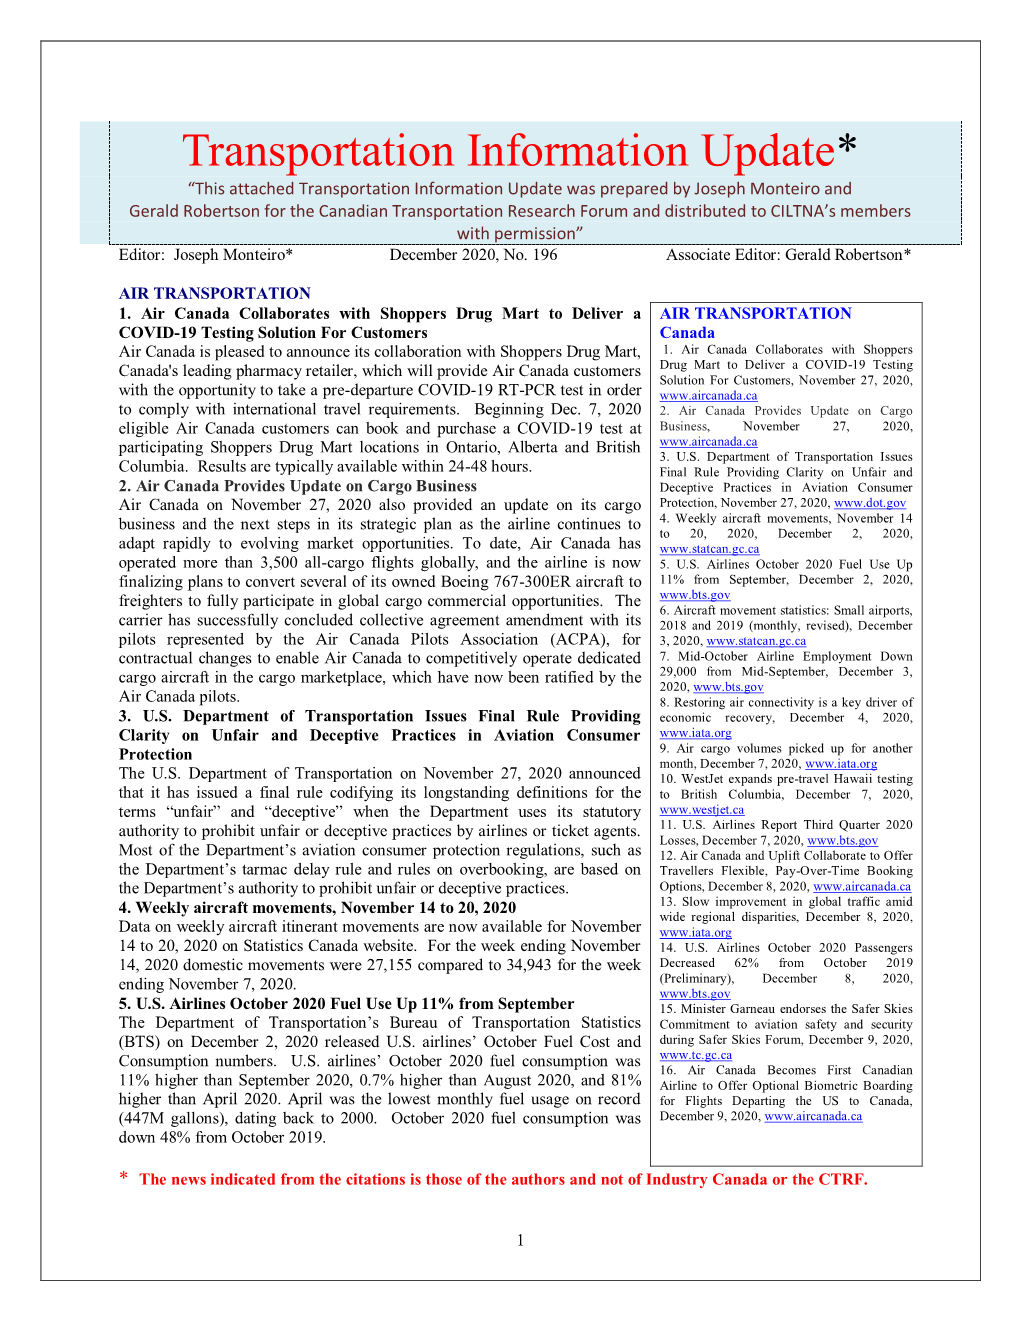 Transportation Information Update, December 2020